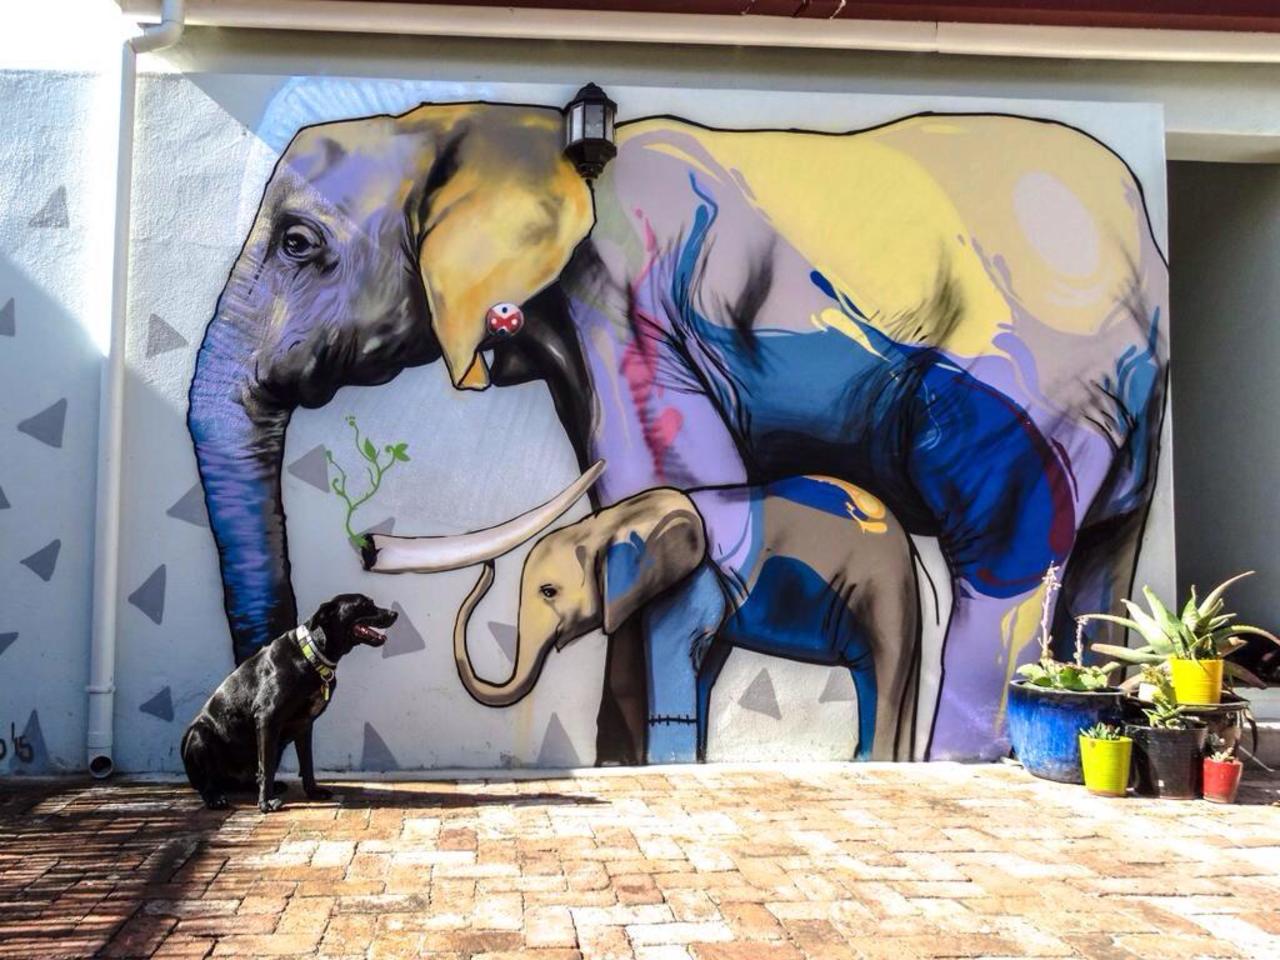 Latest nature in Street Art piece by Falko Paints In Cape Town

#art #mural #graffiti #streetart http://t.co/CNClvvz7fX